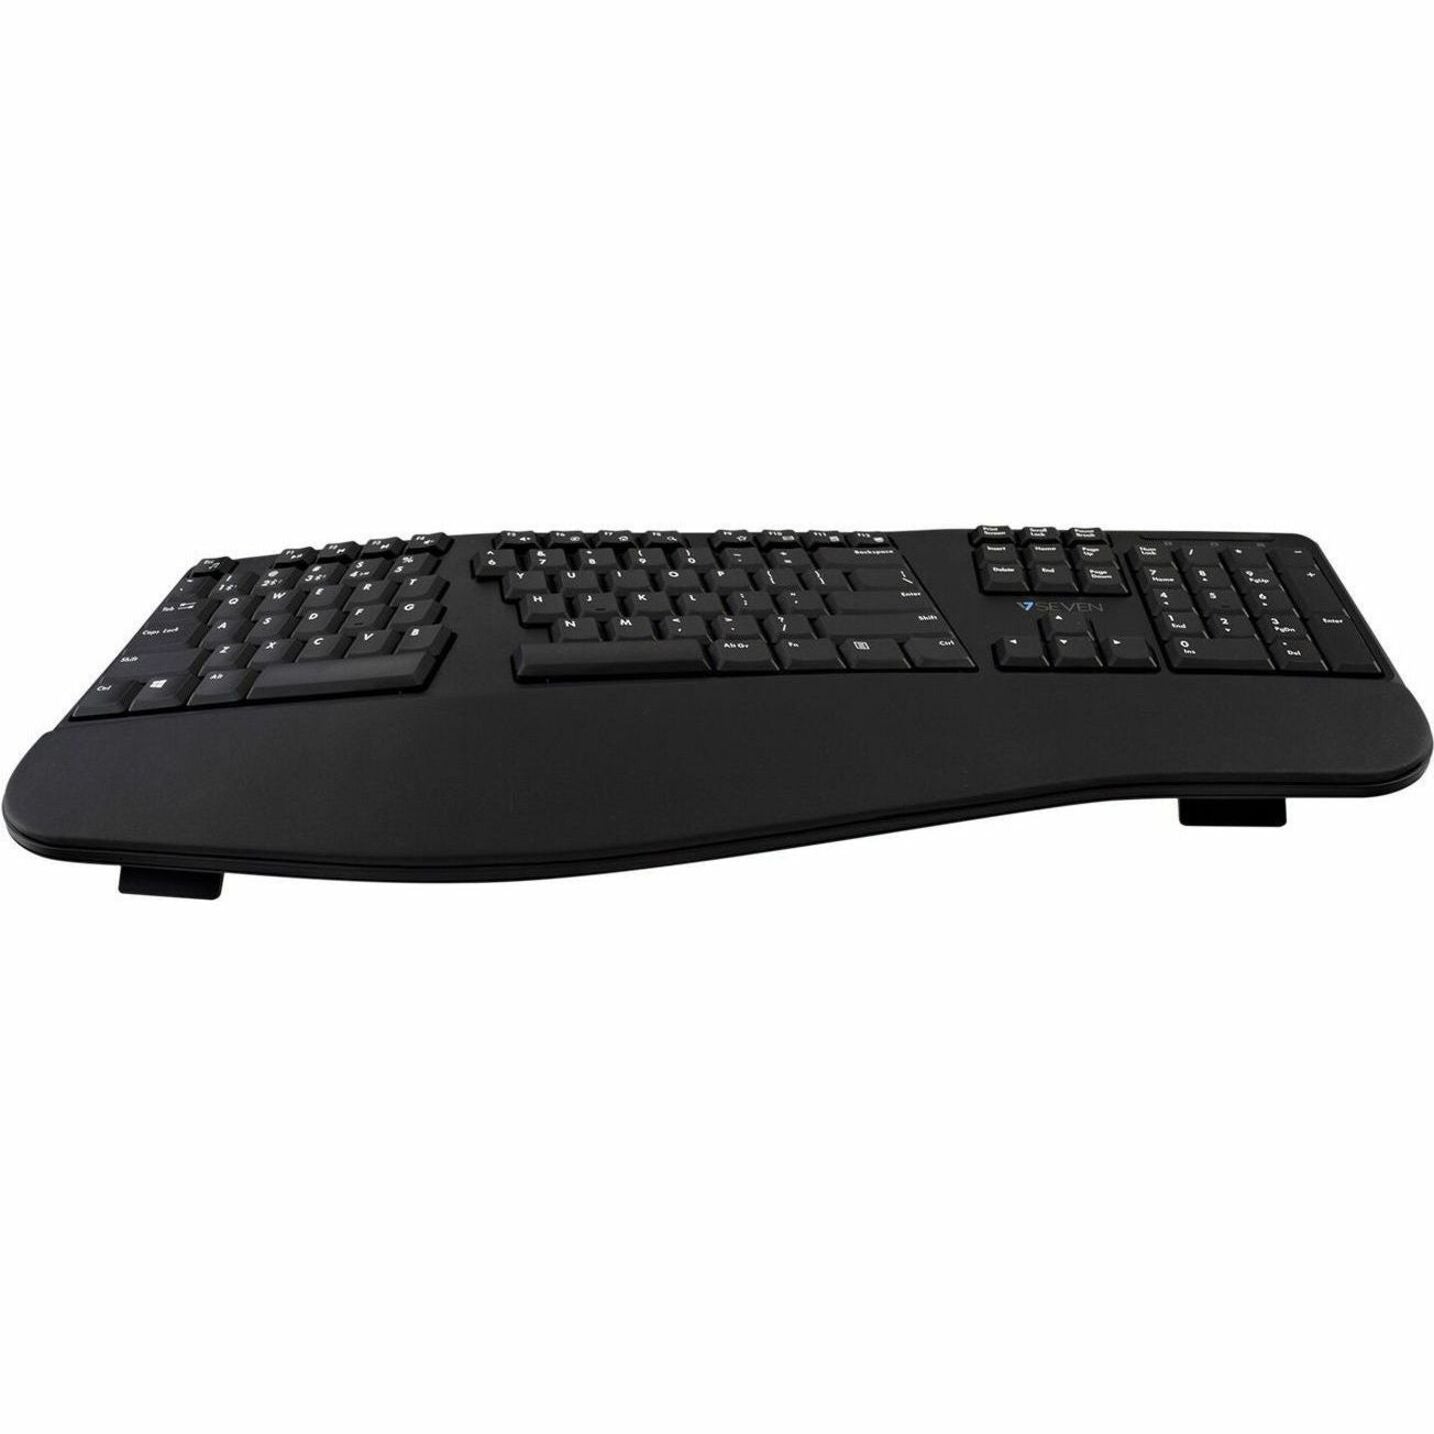 V7 Bluetooth Ergonomic Keyboard and Mouse Combo - US Layout (CKW500BTUS)